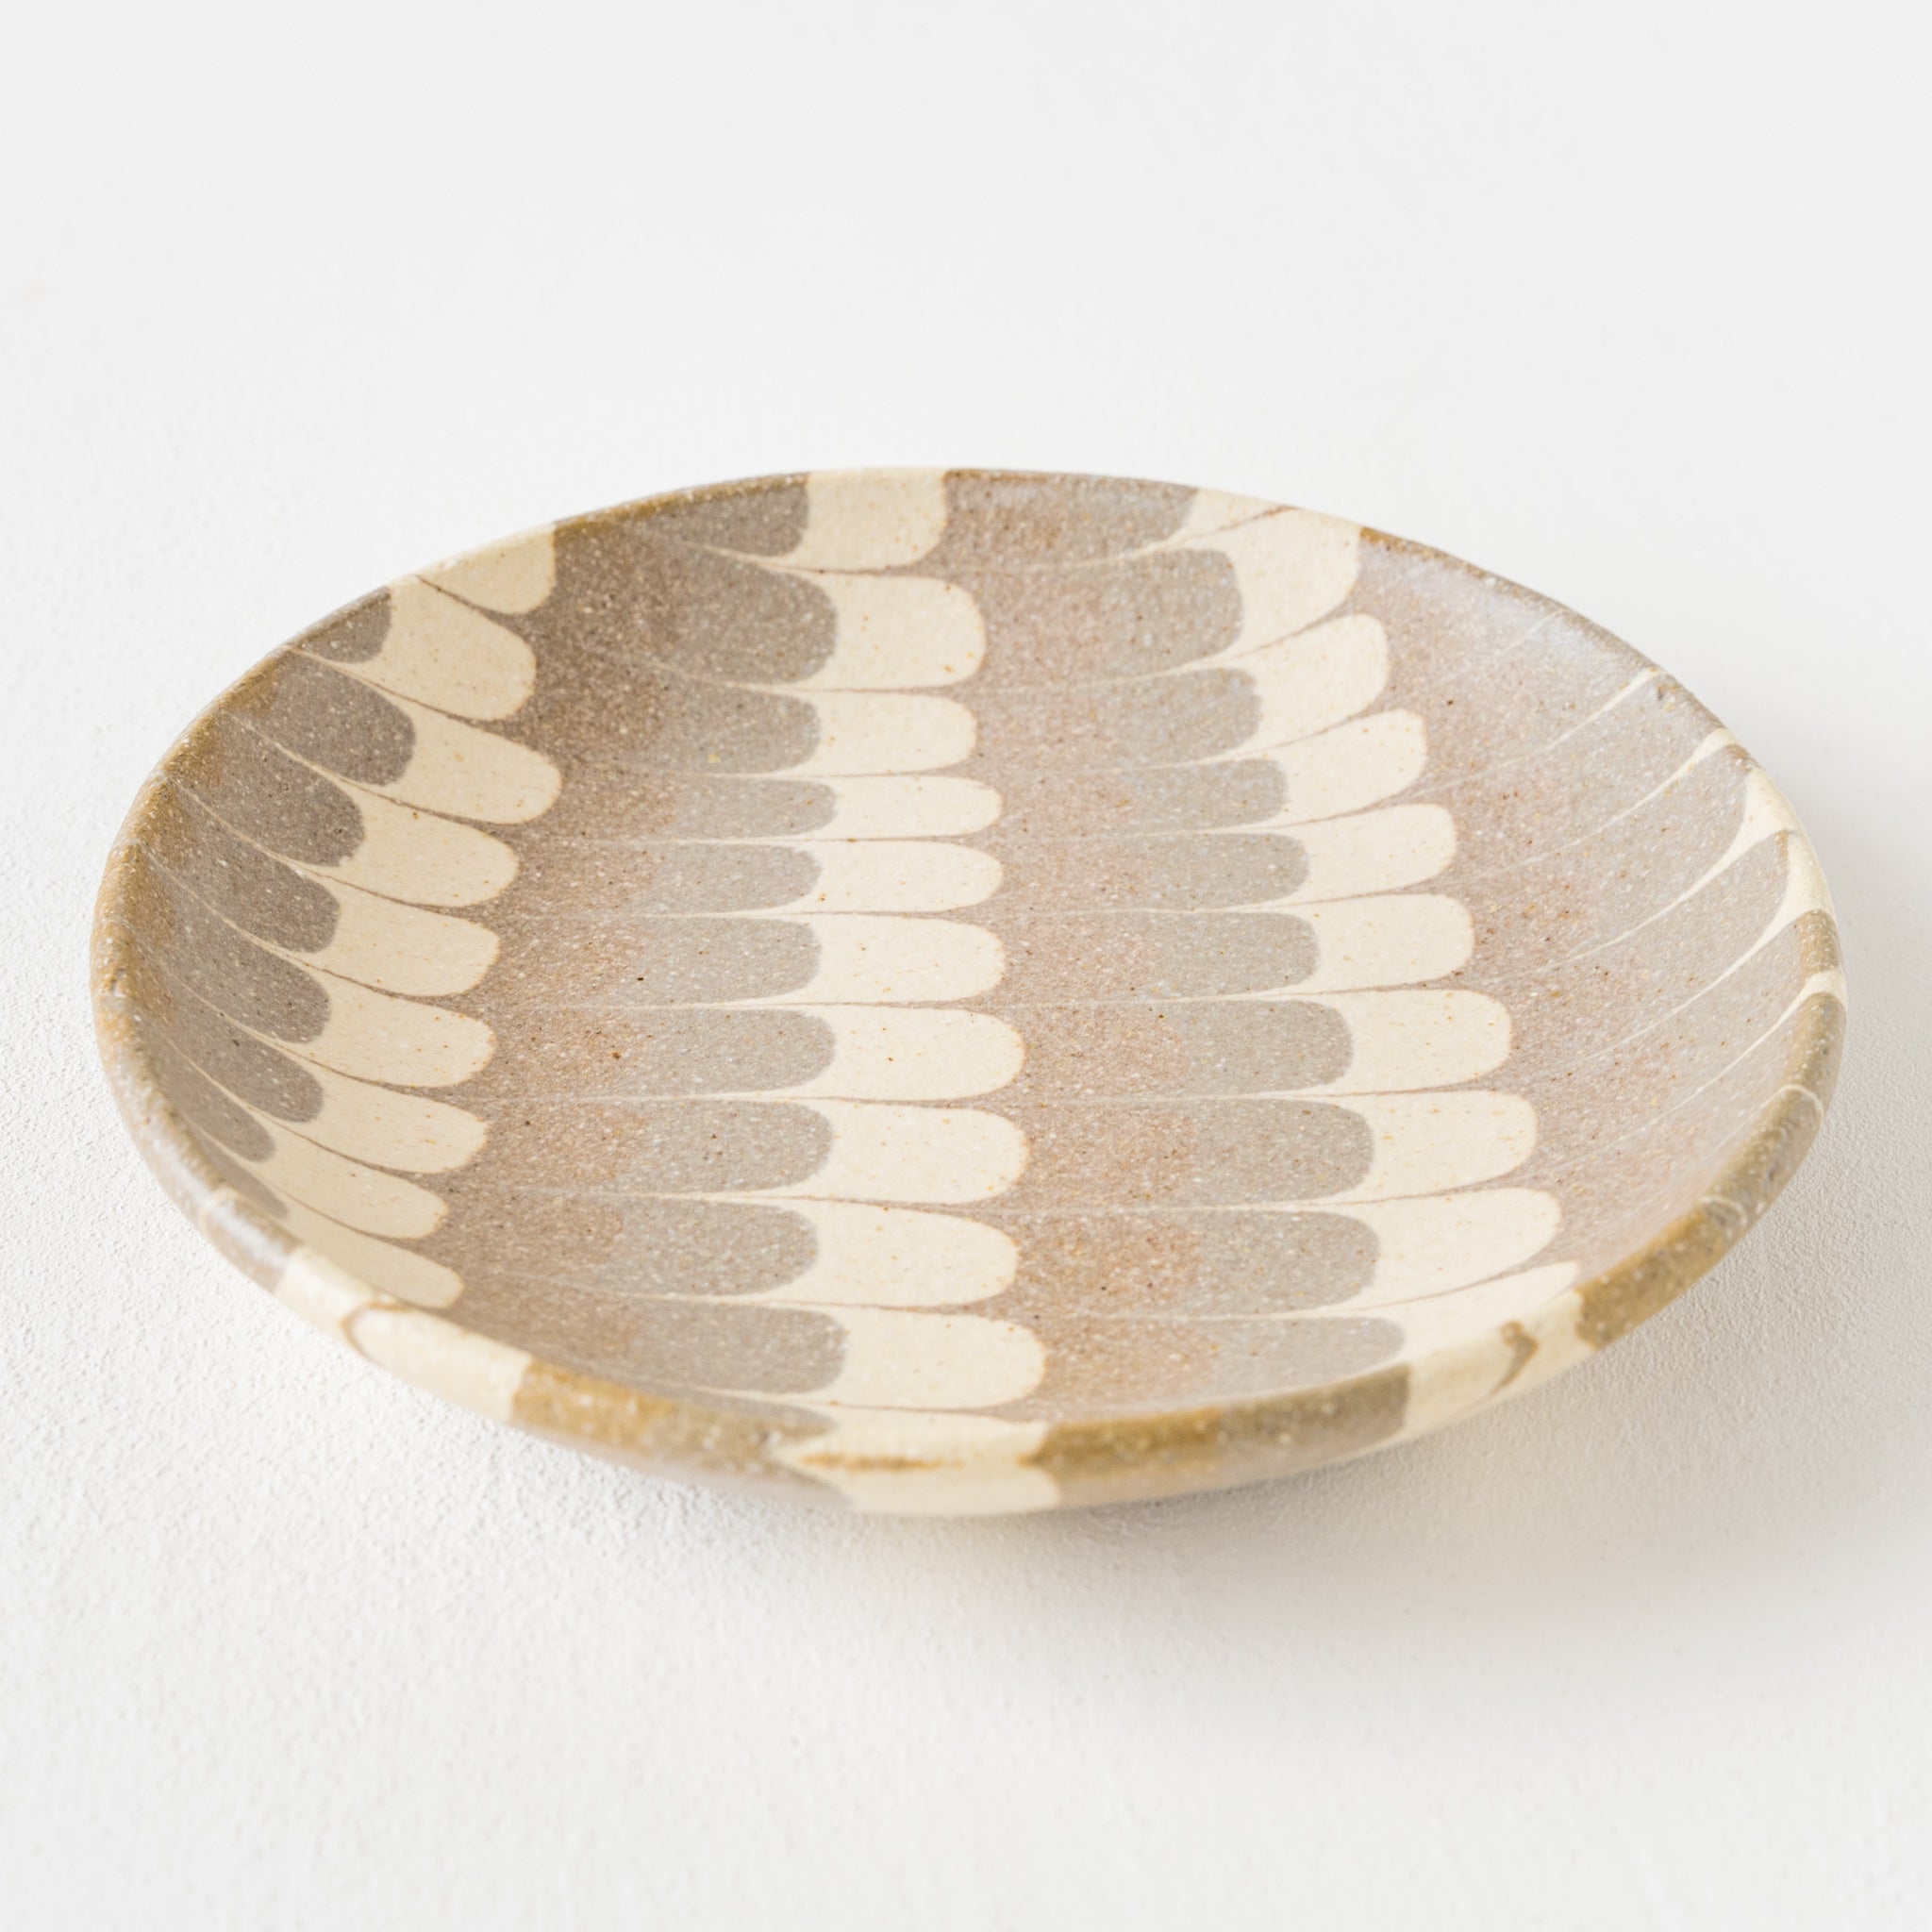 Hanako Sakashita's kneaded round plate with a wonderful quail pattern